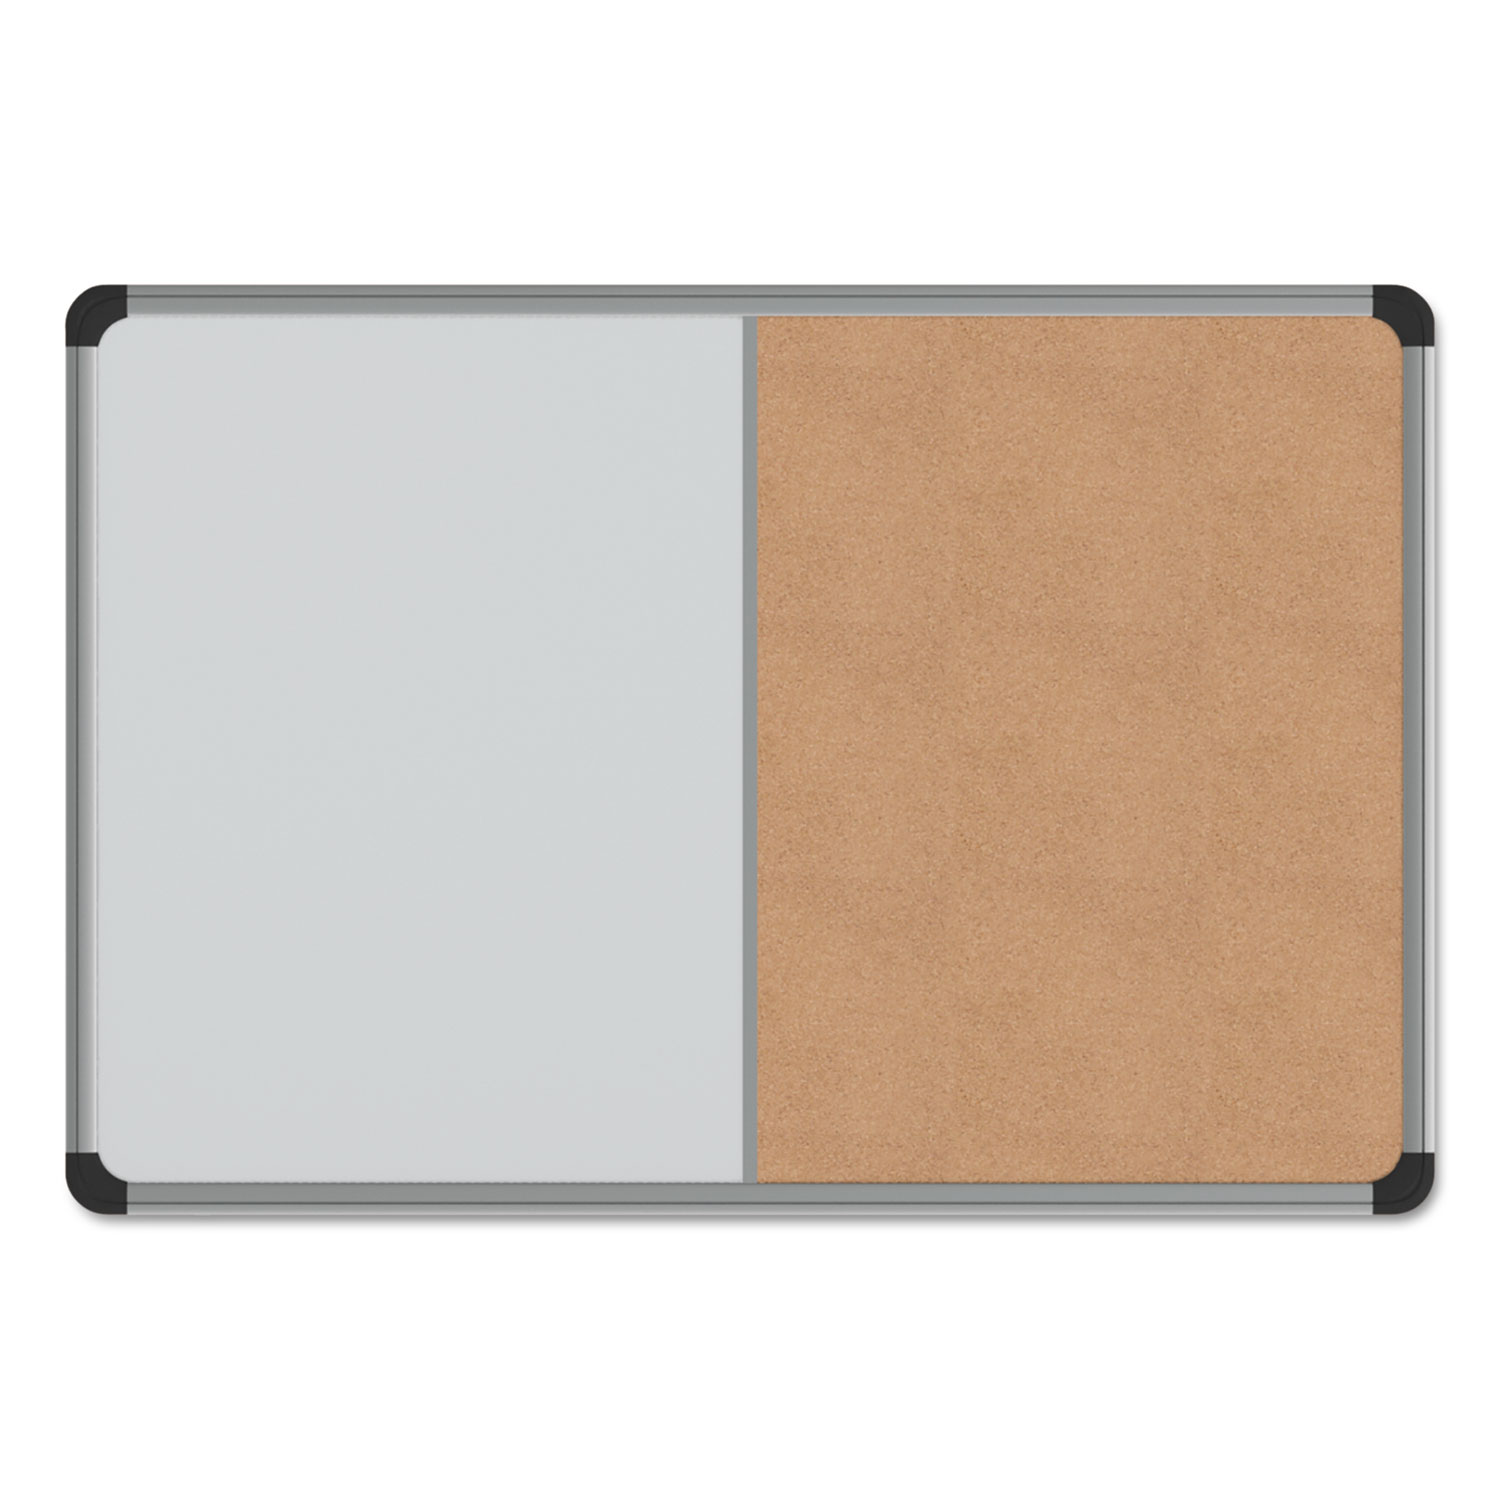  Universal UNV43742 Cork/Dry Erase Board, Melamine, 24 x 18, Black/Gray Aluminum/Plastic Frame (UNV43742) 